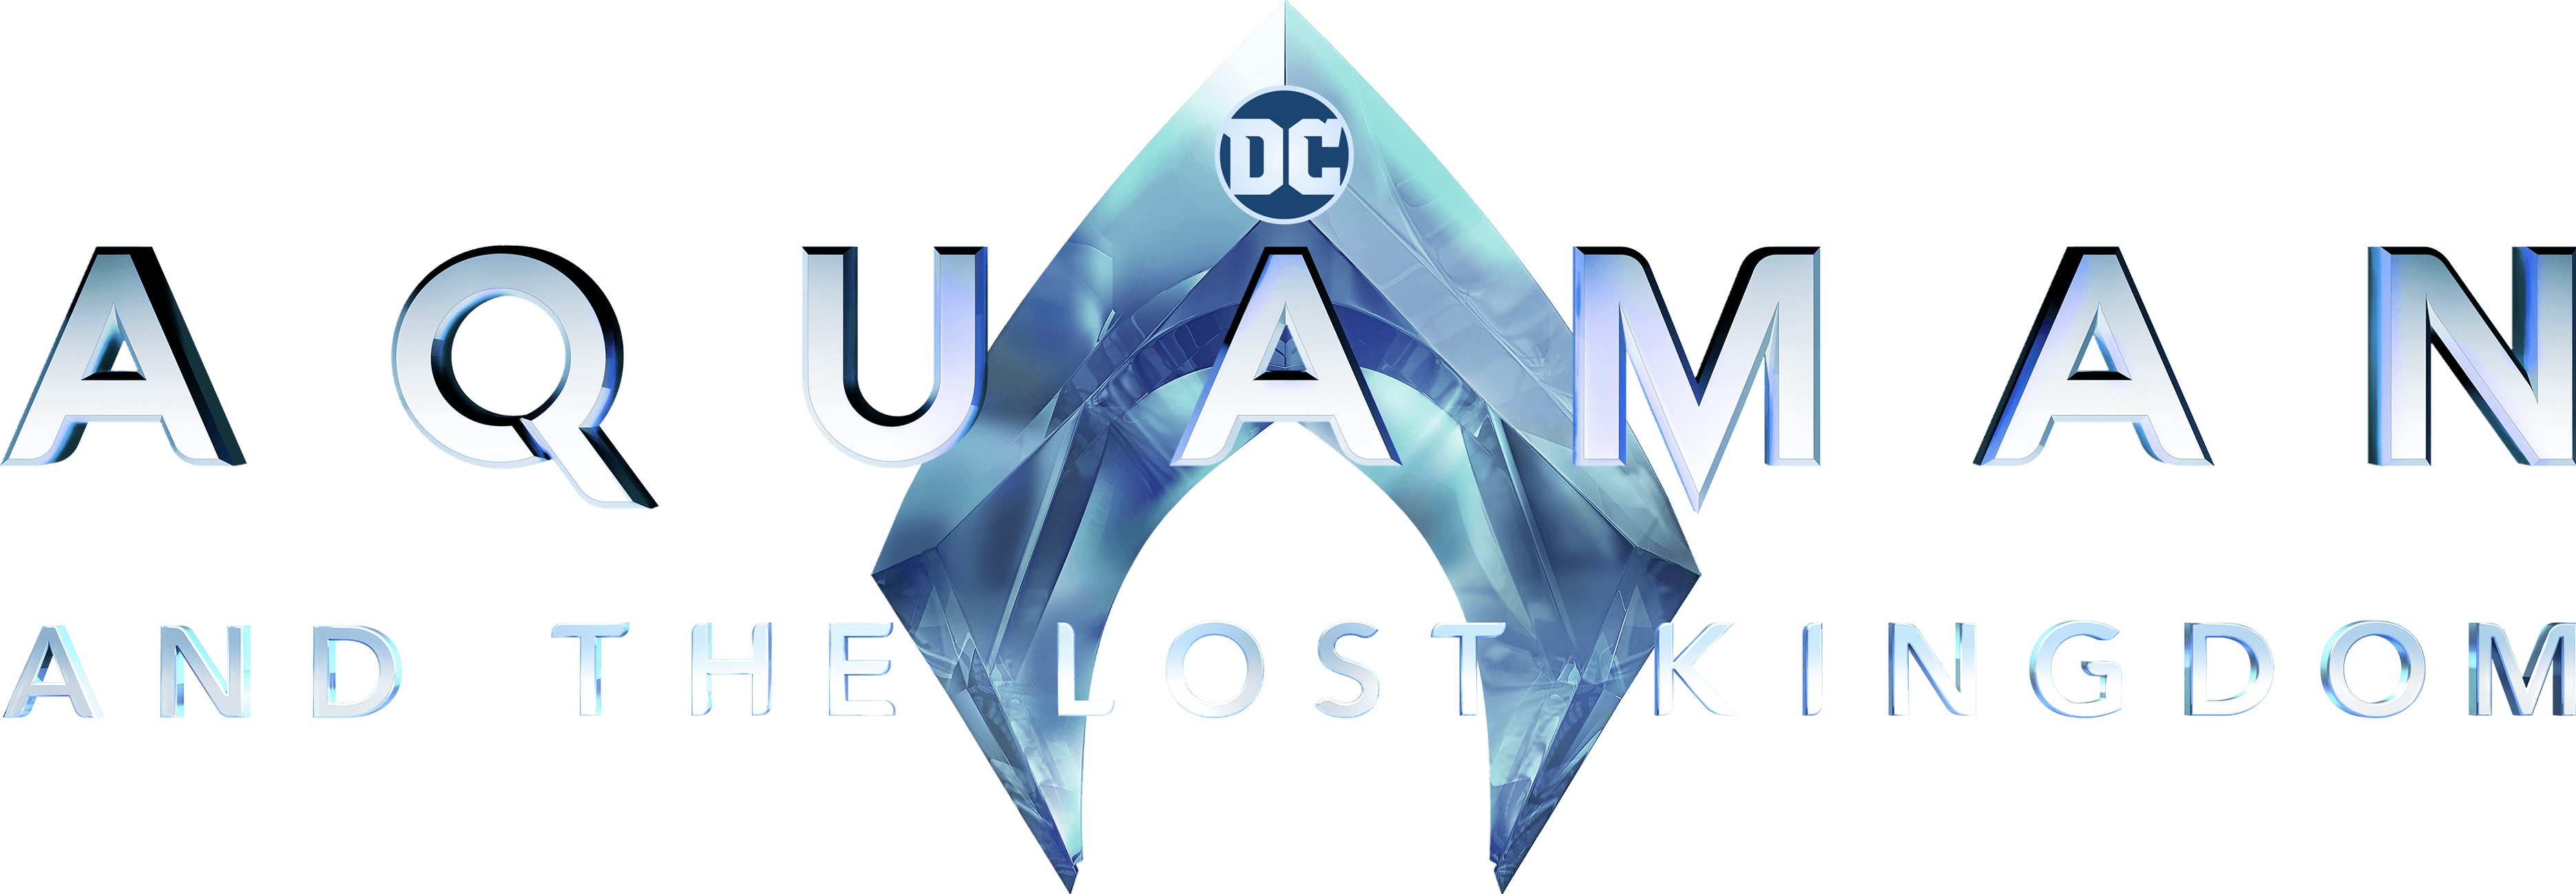 Aquaman and the Lost Kingdom logo